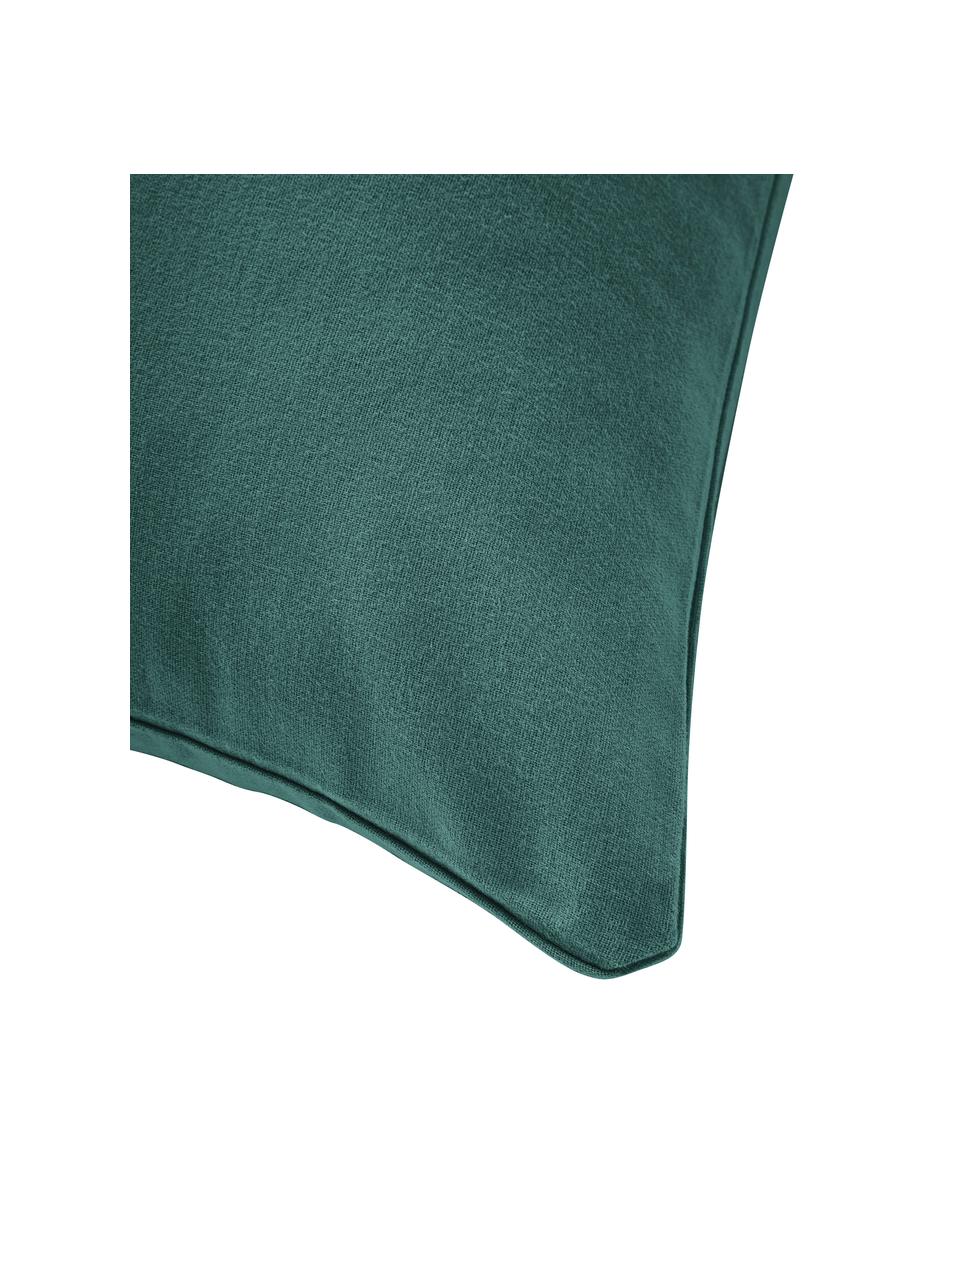 Flanell-Kopfkissenbezug Biba, Webart: Flanell Flanell ist ein k, Waldgrün, B 40 x L 80 cm